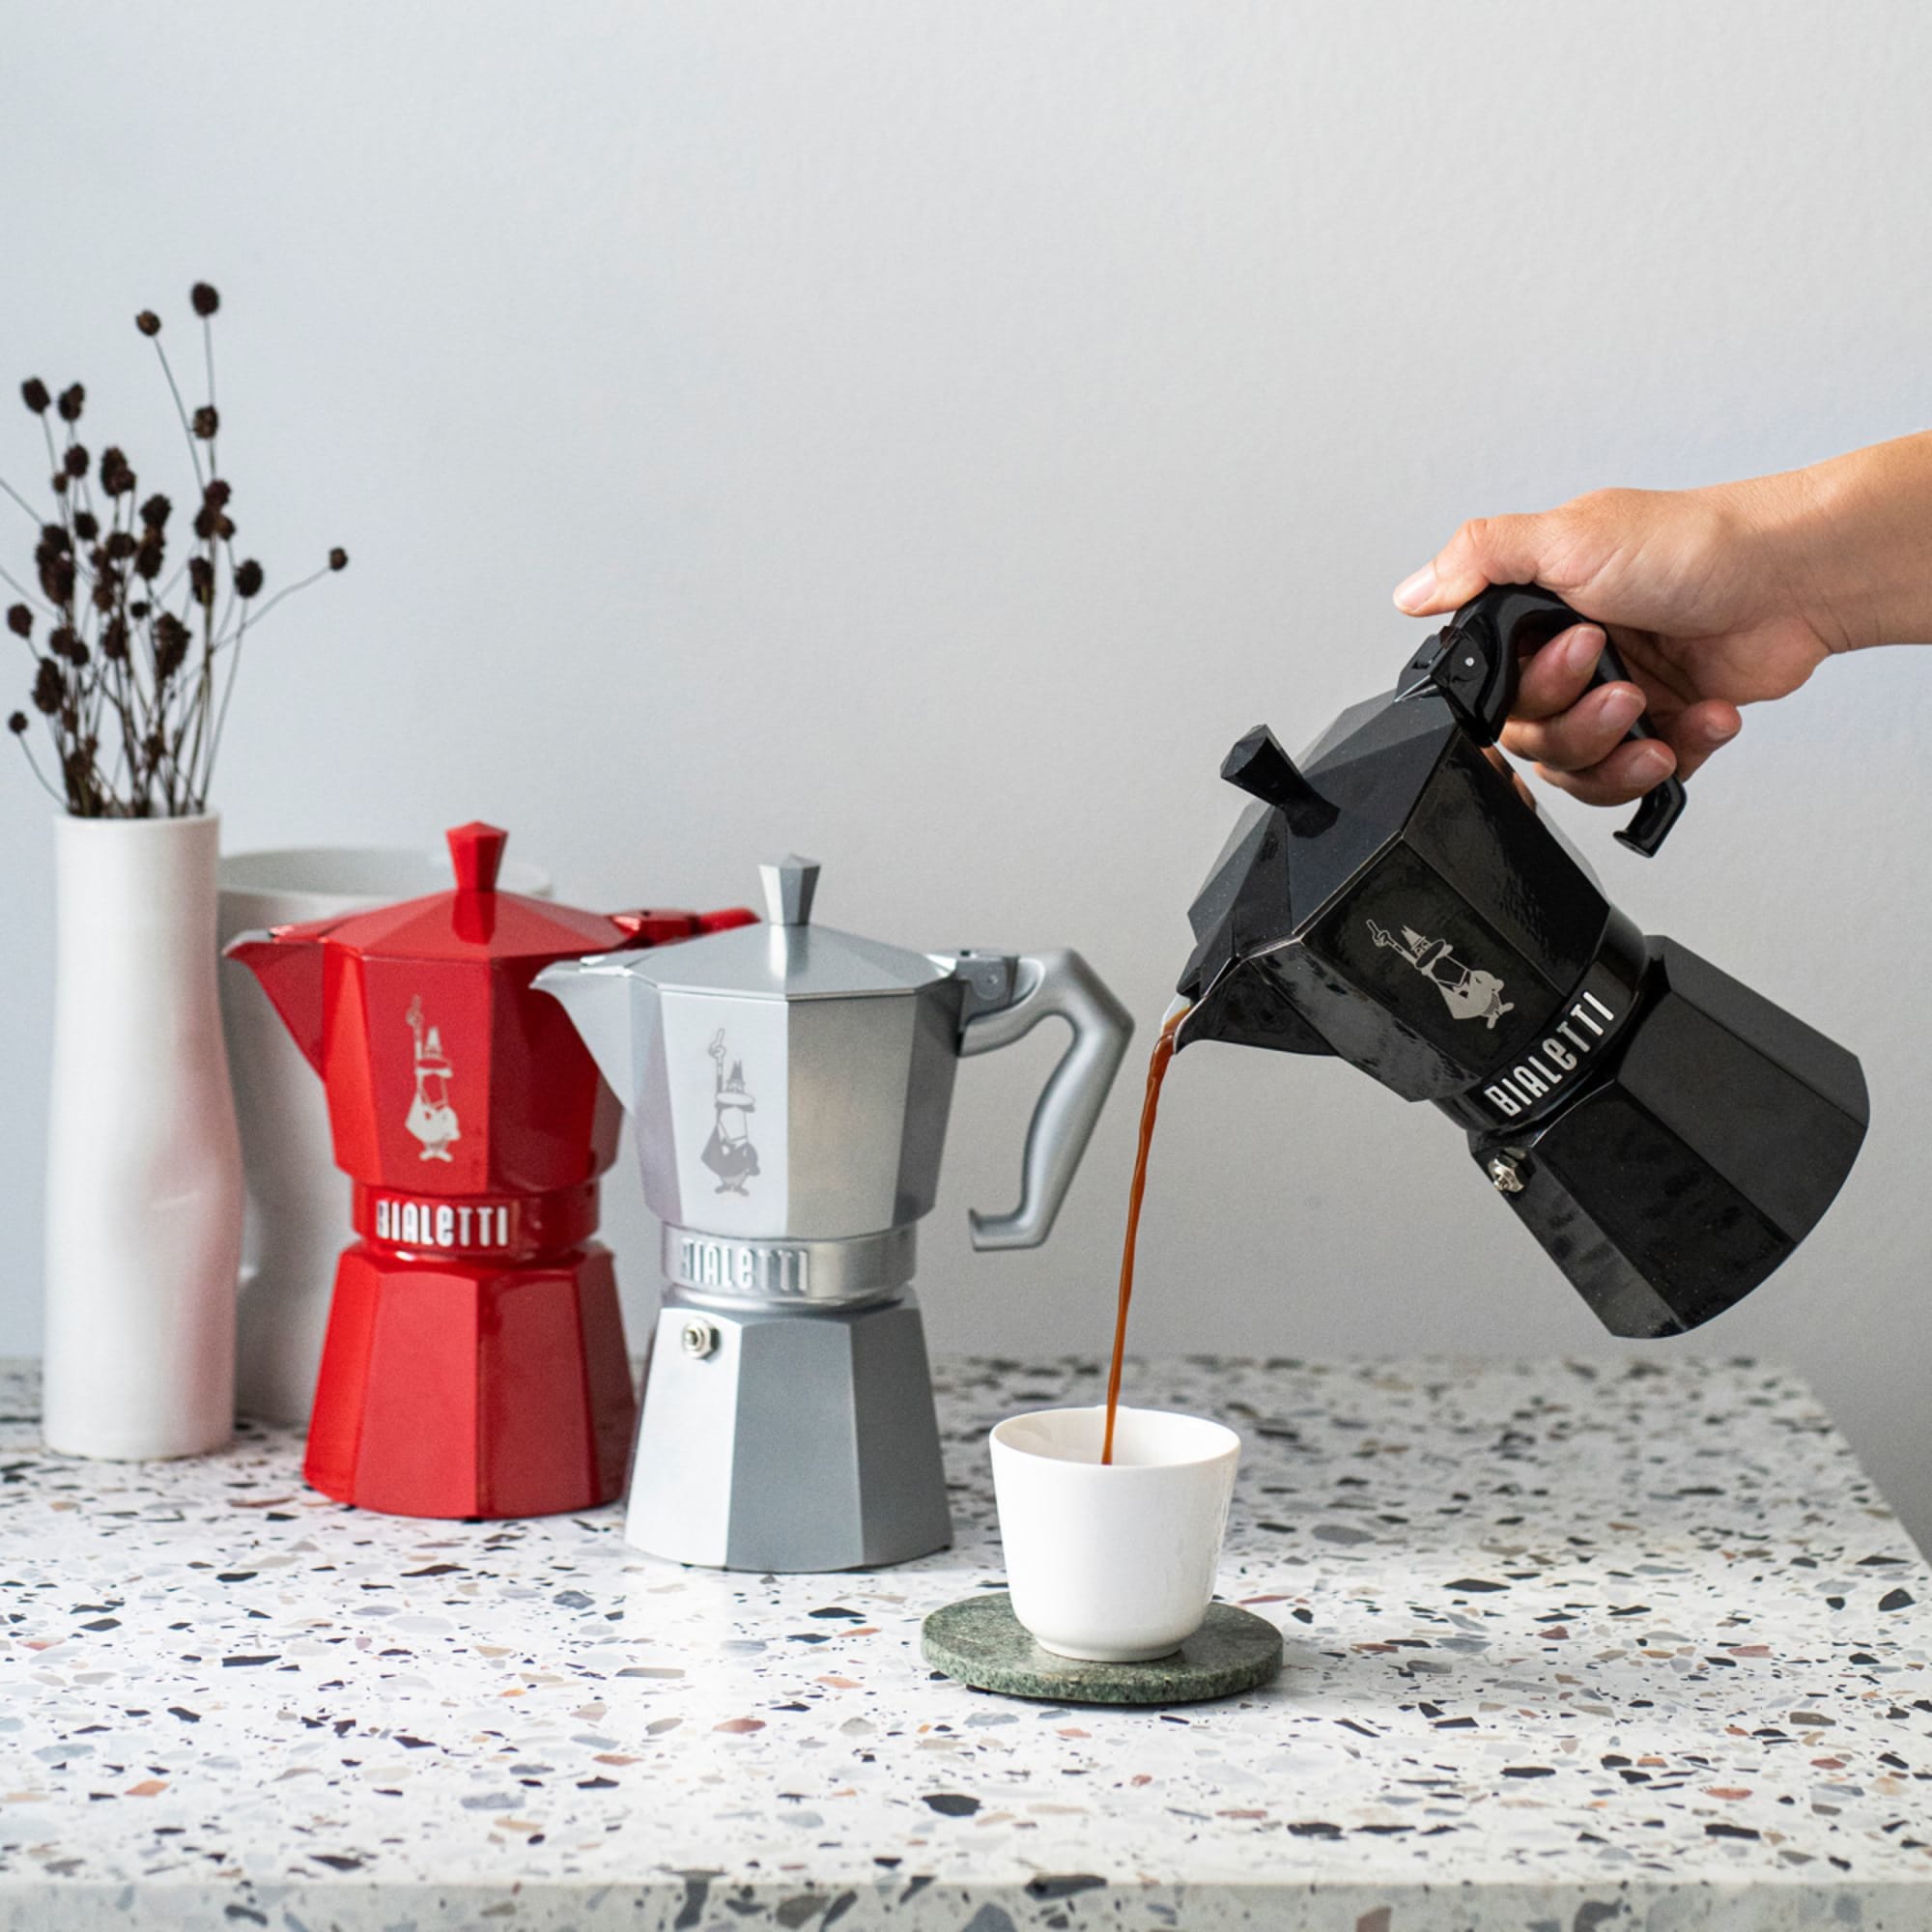  Bialetti - Moka Express: Iconic Stovetop Espresso Maker, Makes  Real Italian Coffee, Moka Pot 1 Cup (2 Oz - 60 Ml), Aluminium, Silver:  Stovetop Espresso Pots: Home & Kitchen